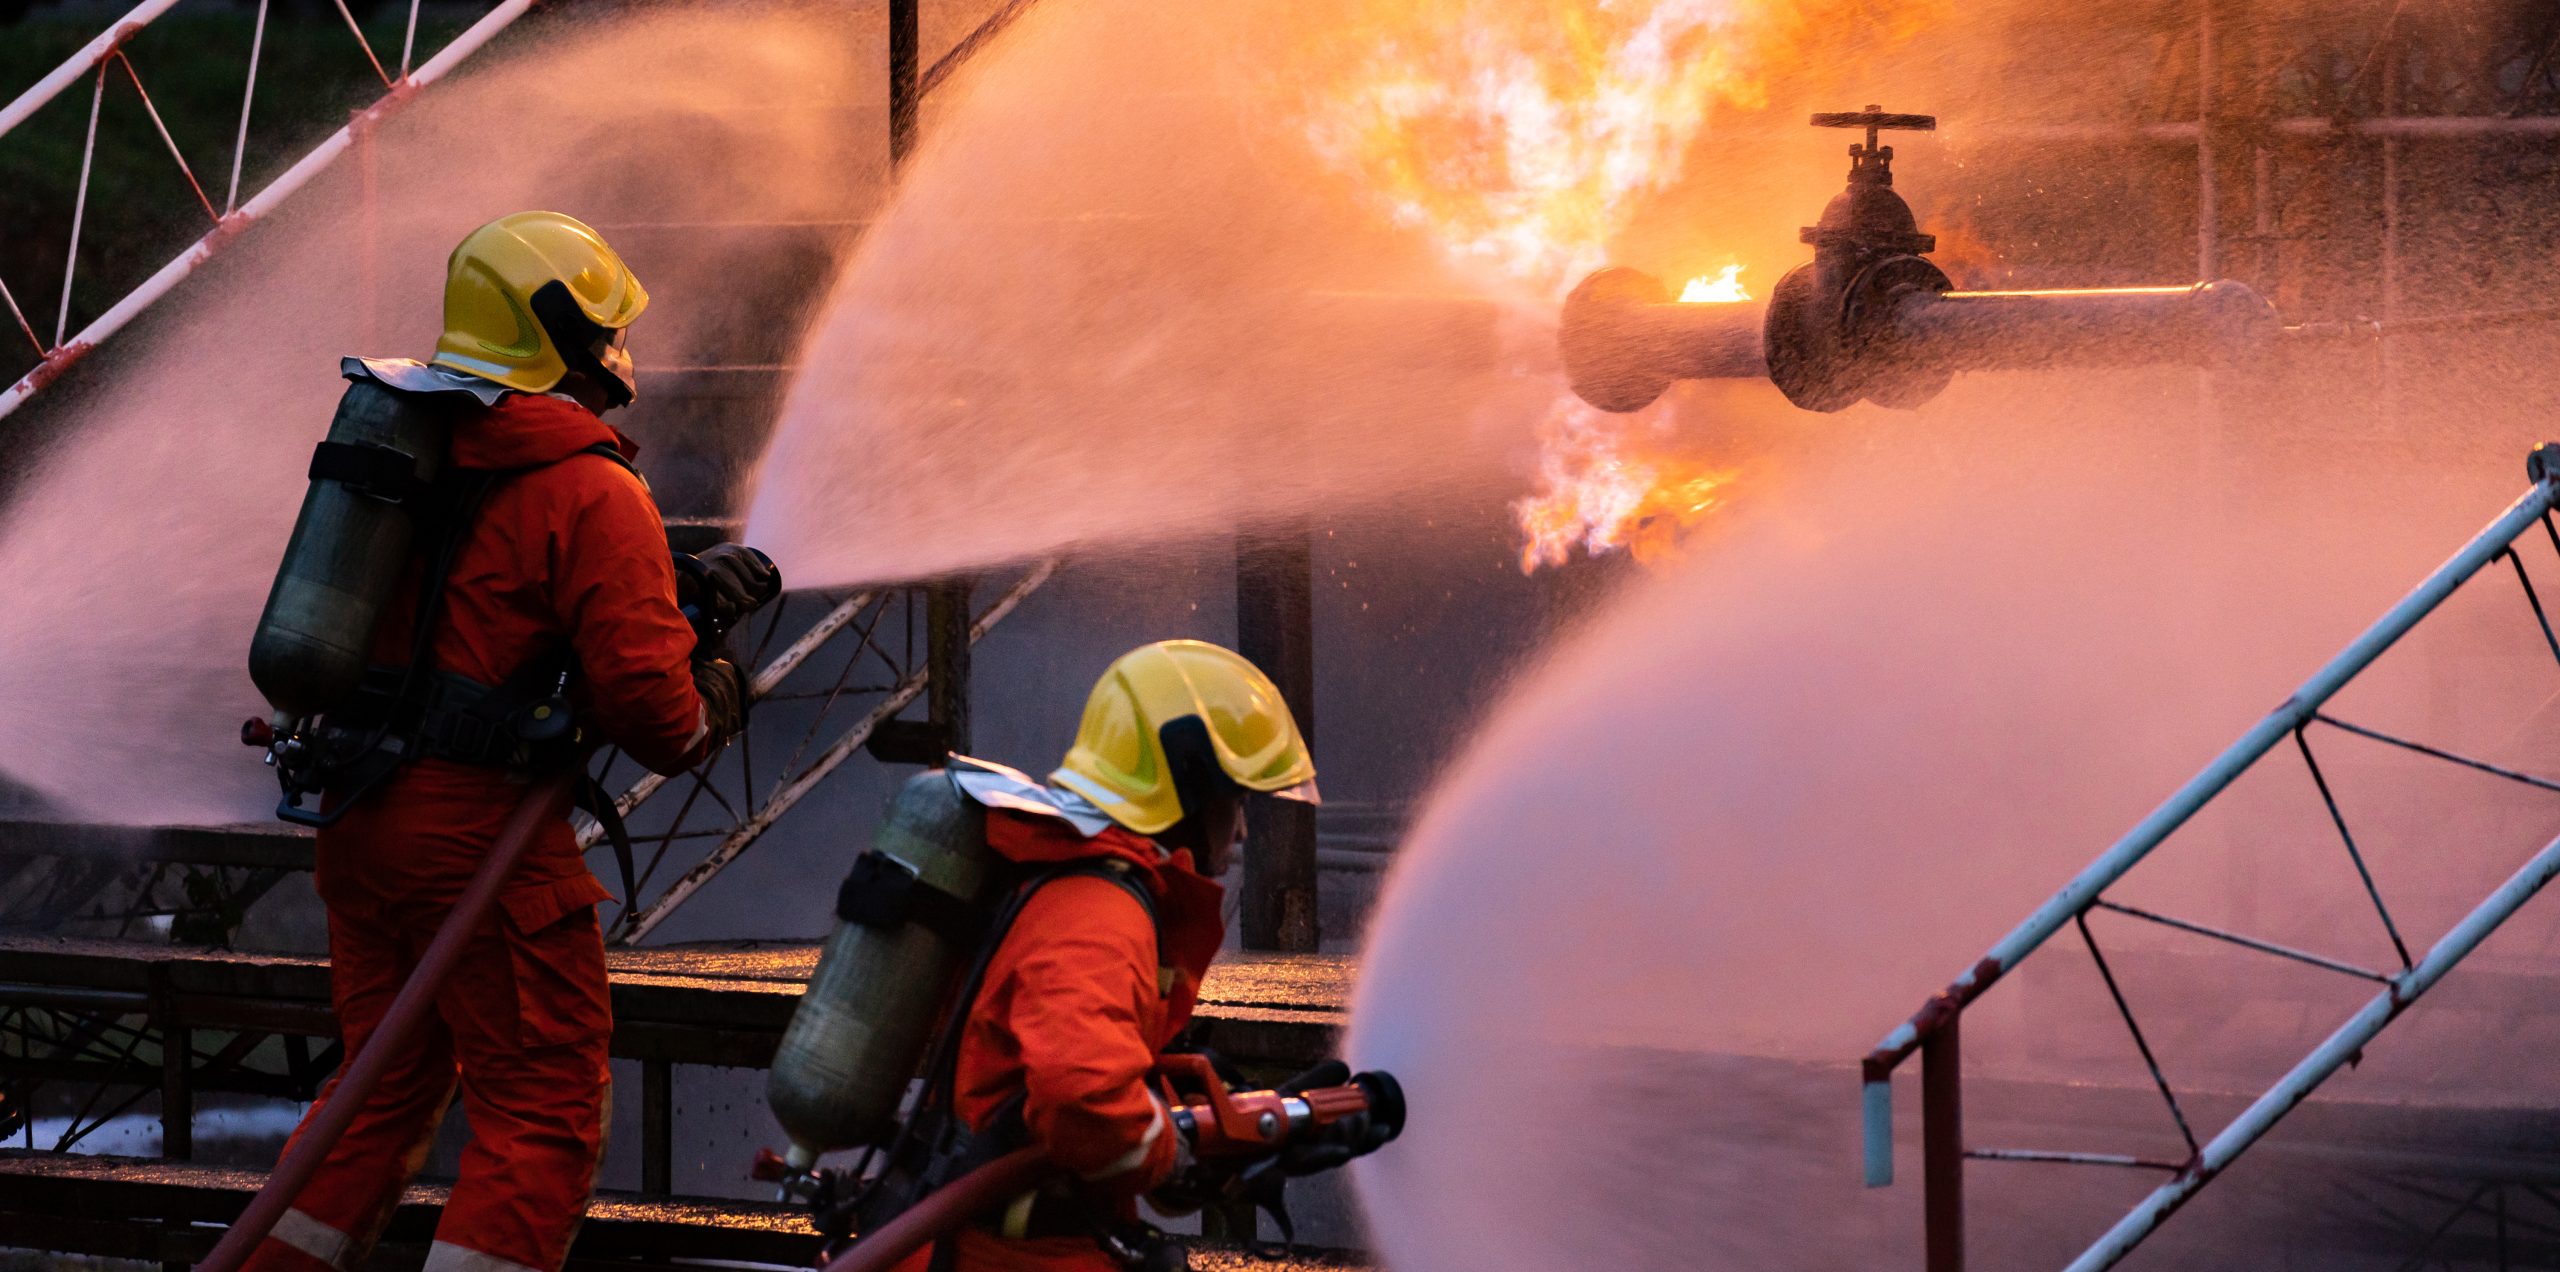 equipo-bombero-panoramico-utiliza-extintor-incendios-tipo-niebla-agua-luchar-llama-scaled.jpg